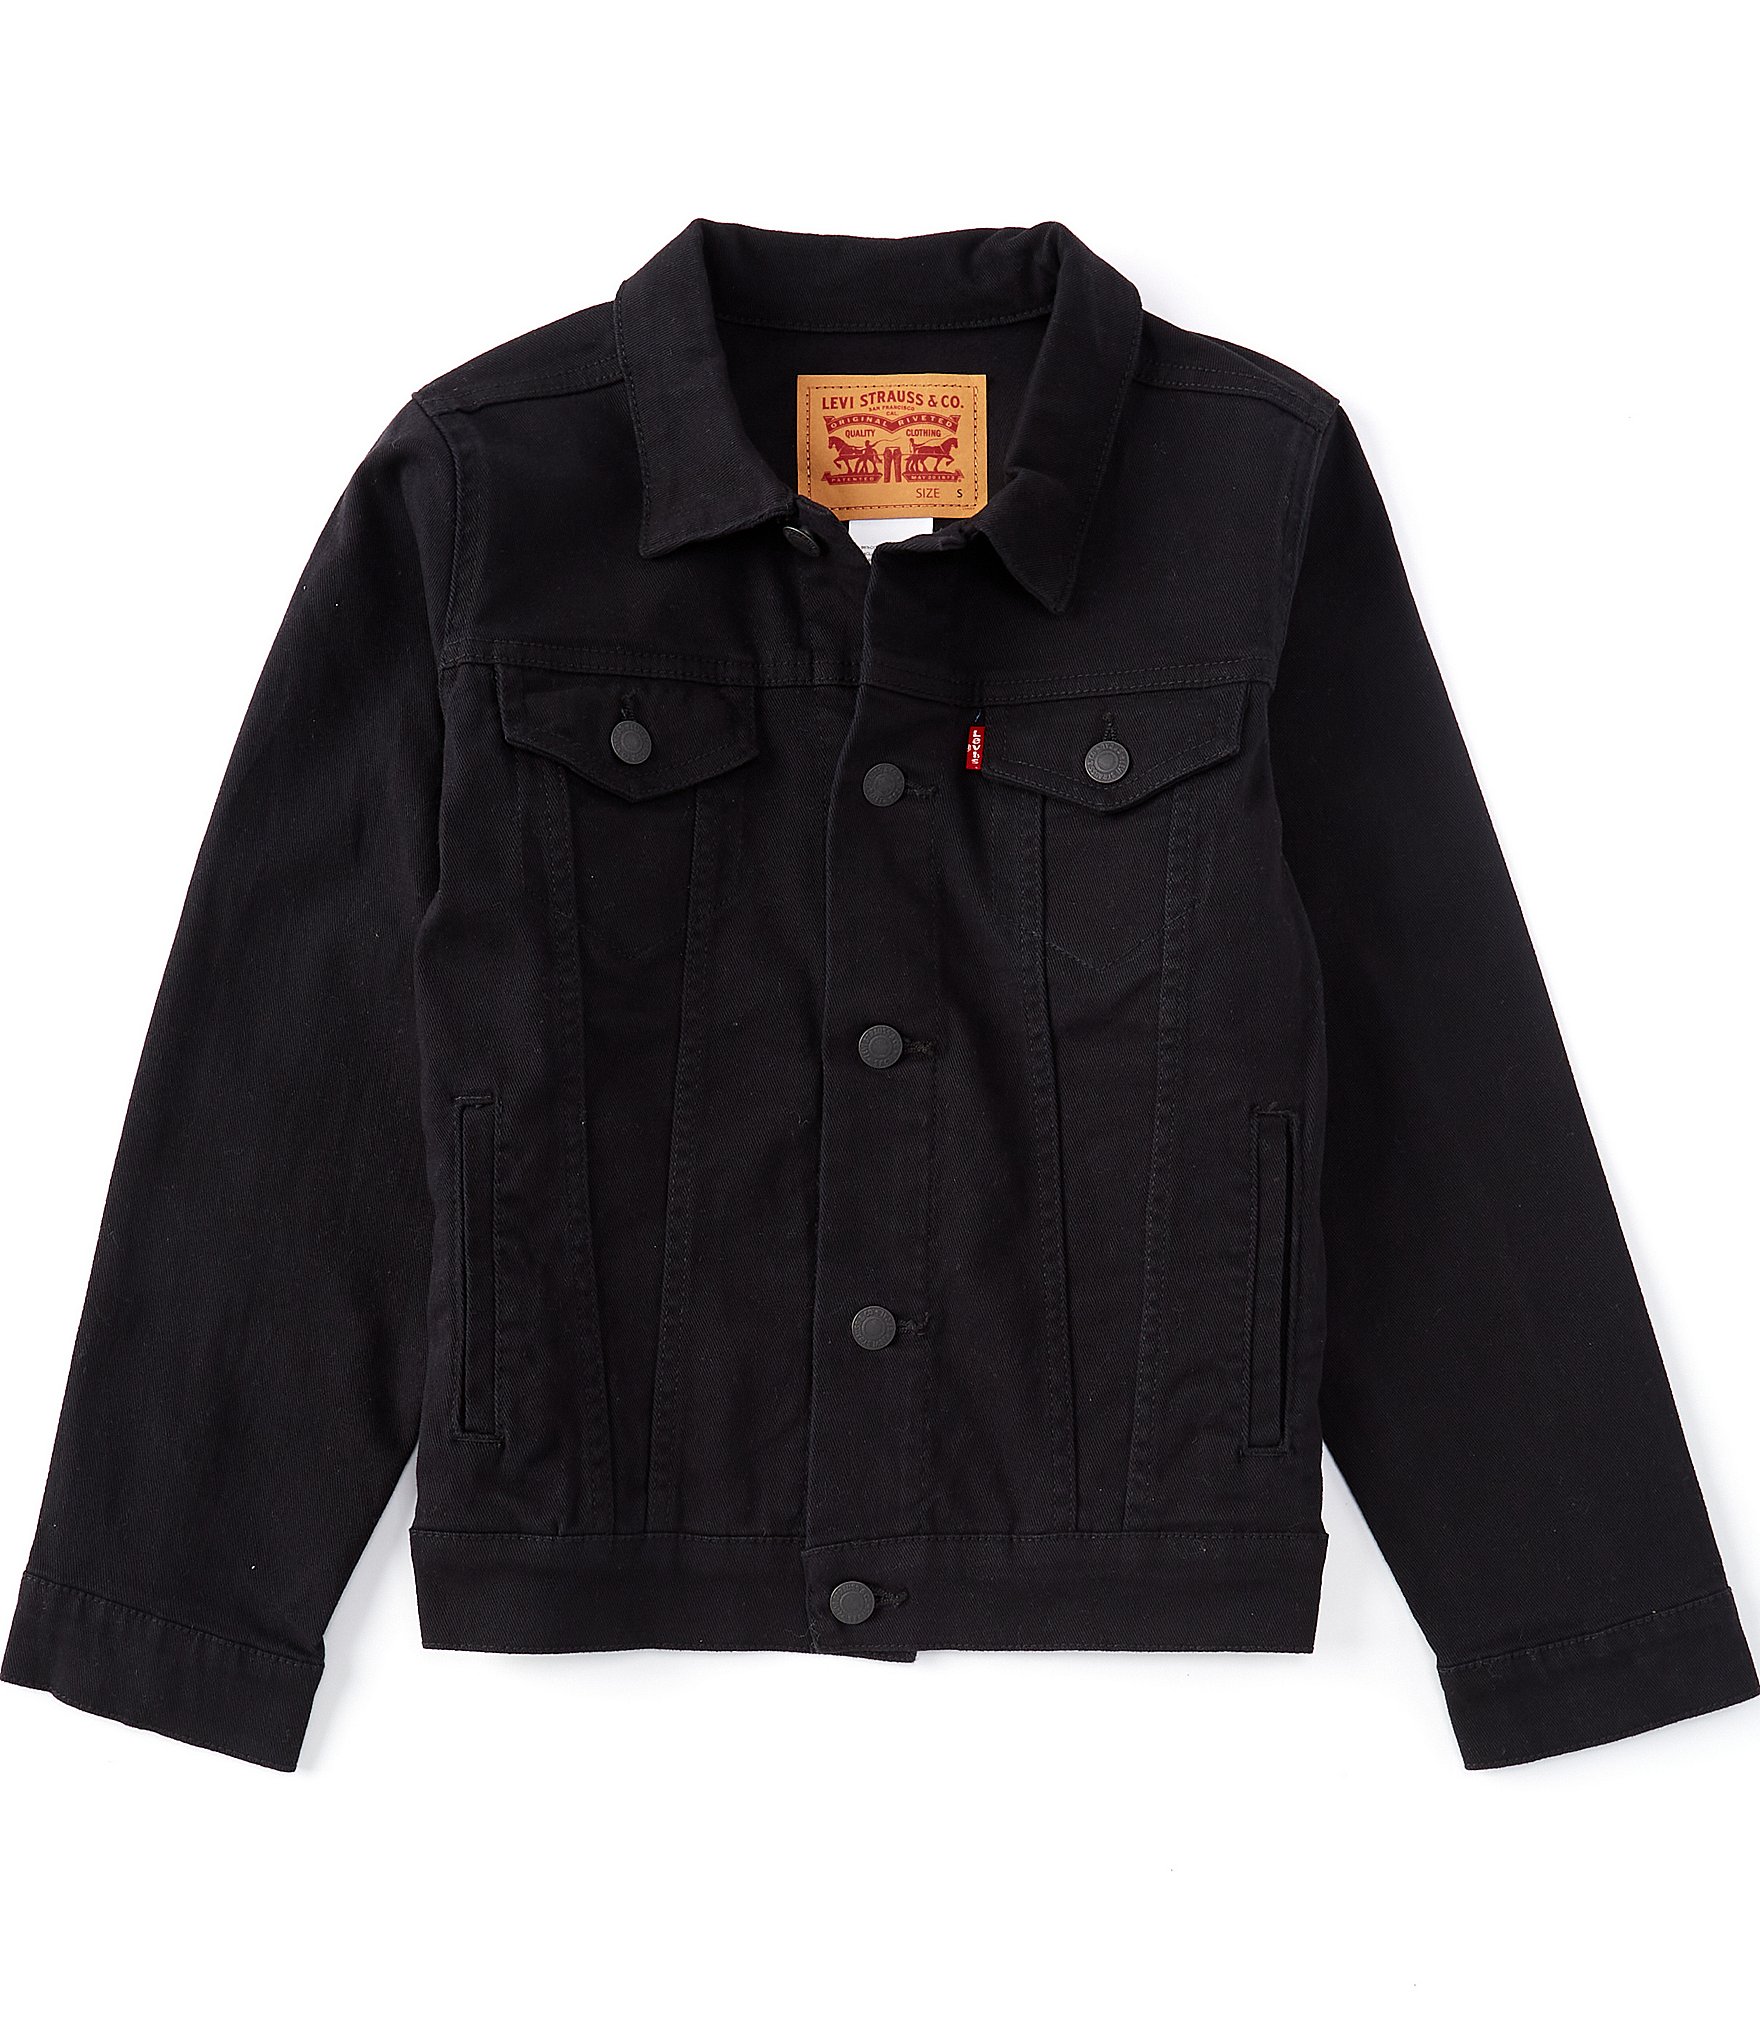 Levi's Boys' Denim Trucker Jacket, Medium, Black